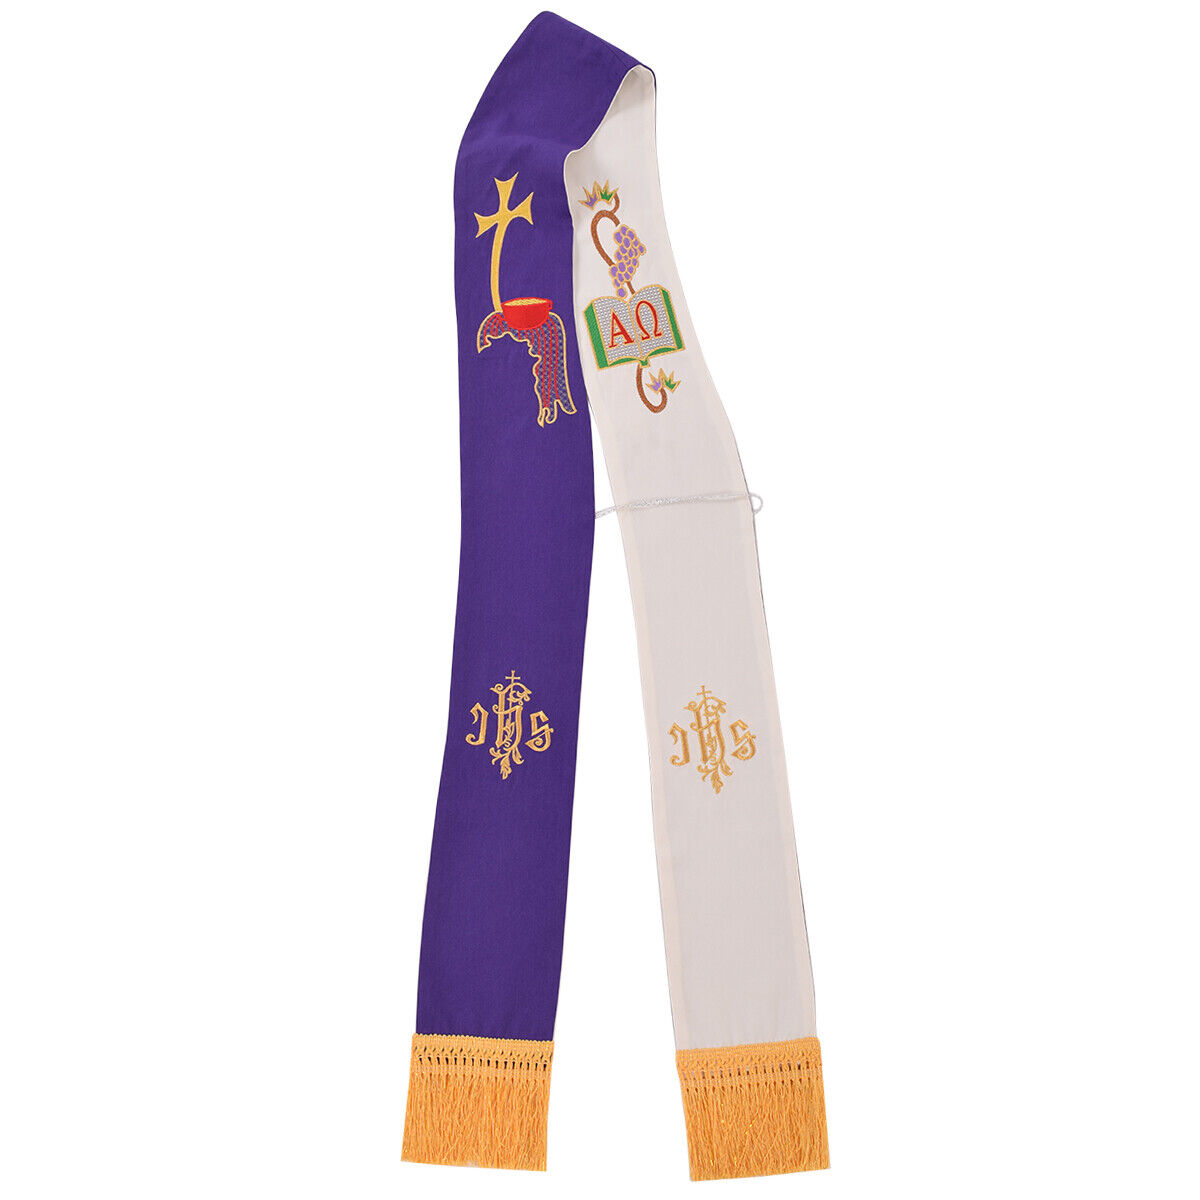 Deacon Purple/White Reversible Stole Diaconate JHS Grape Book Embroidered Stole